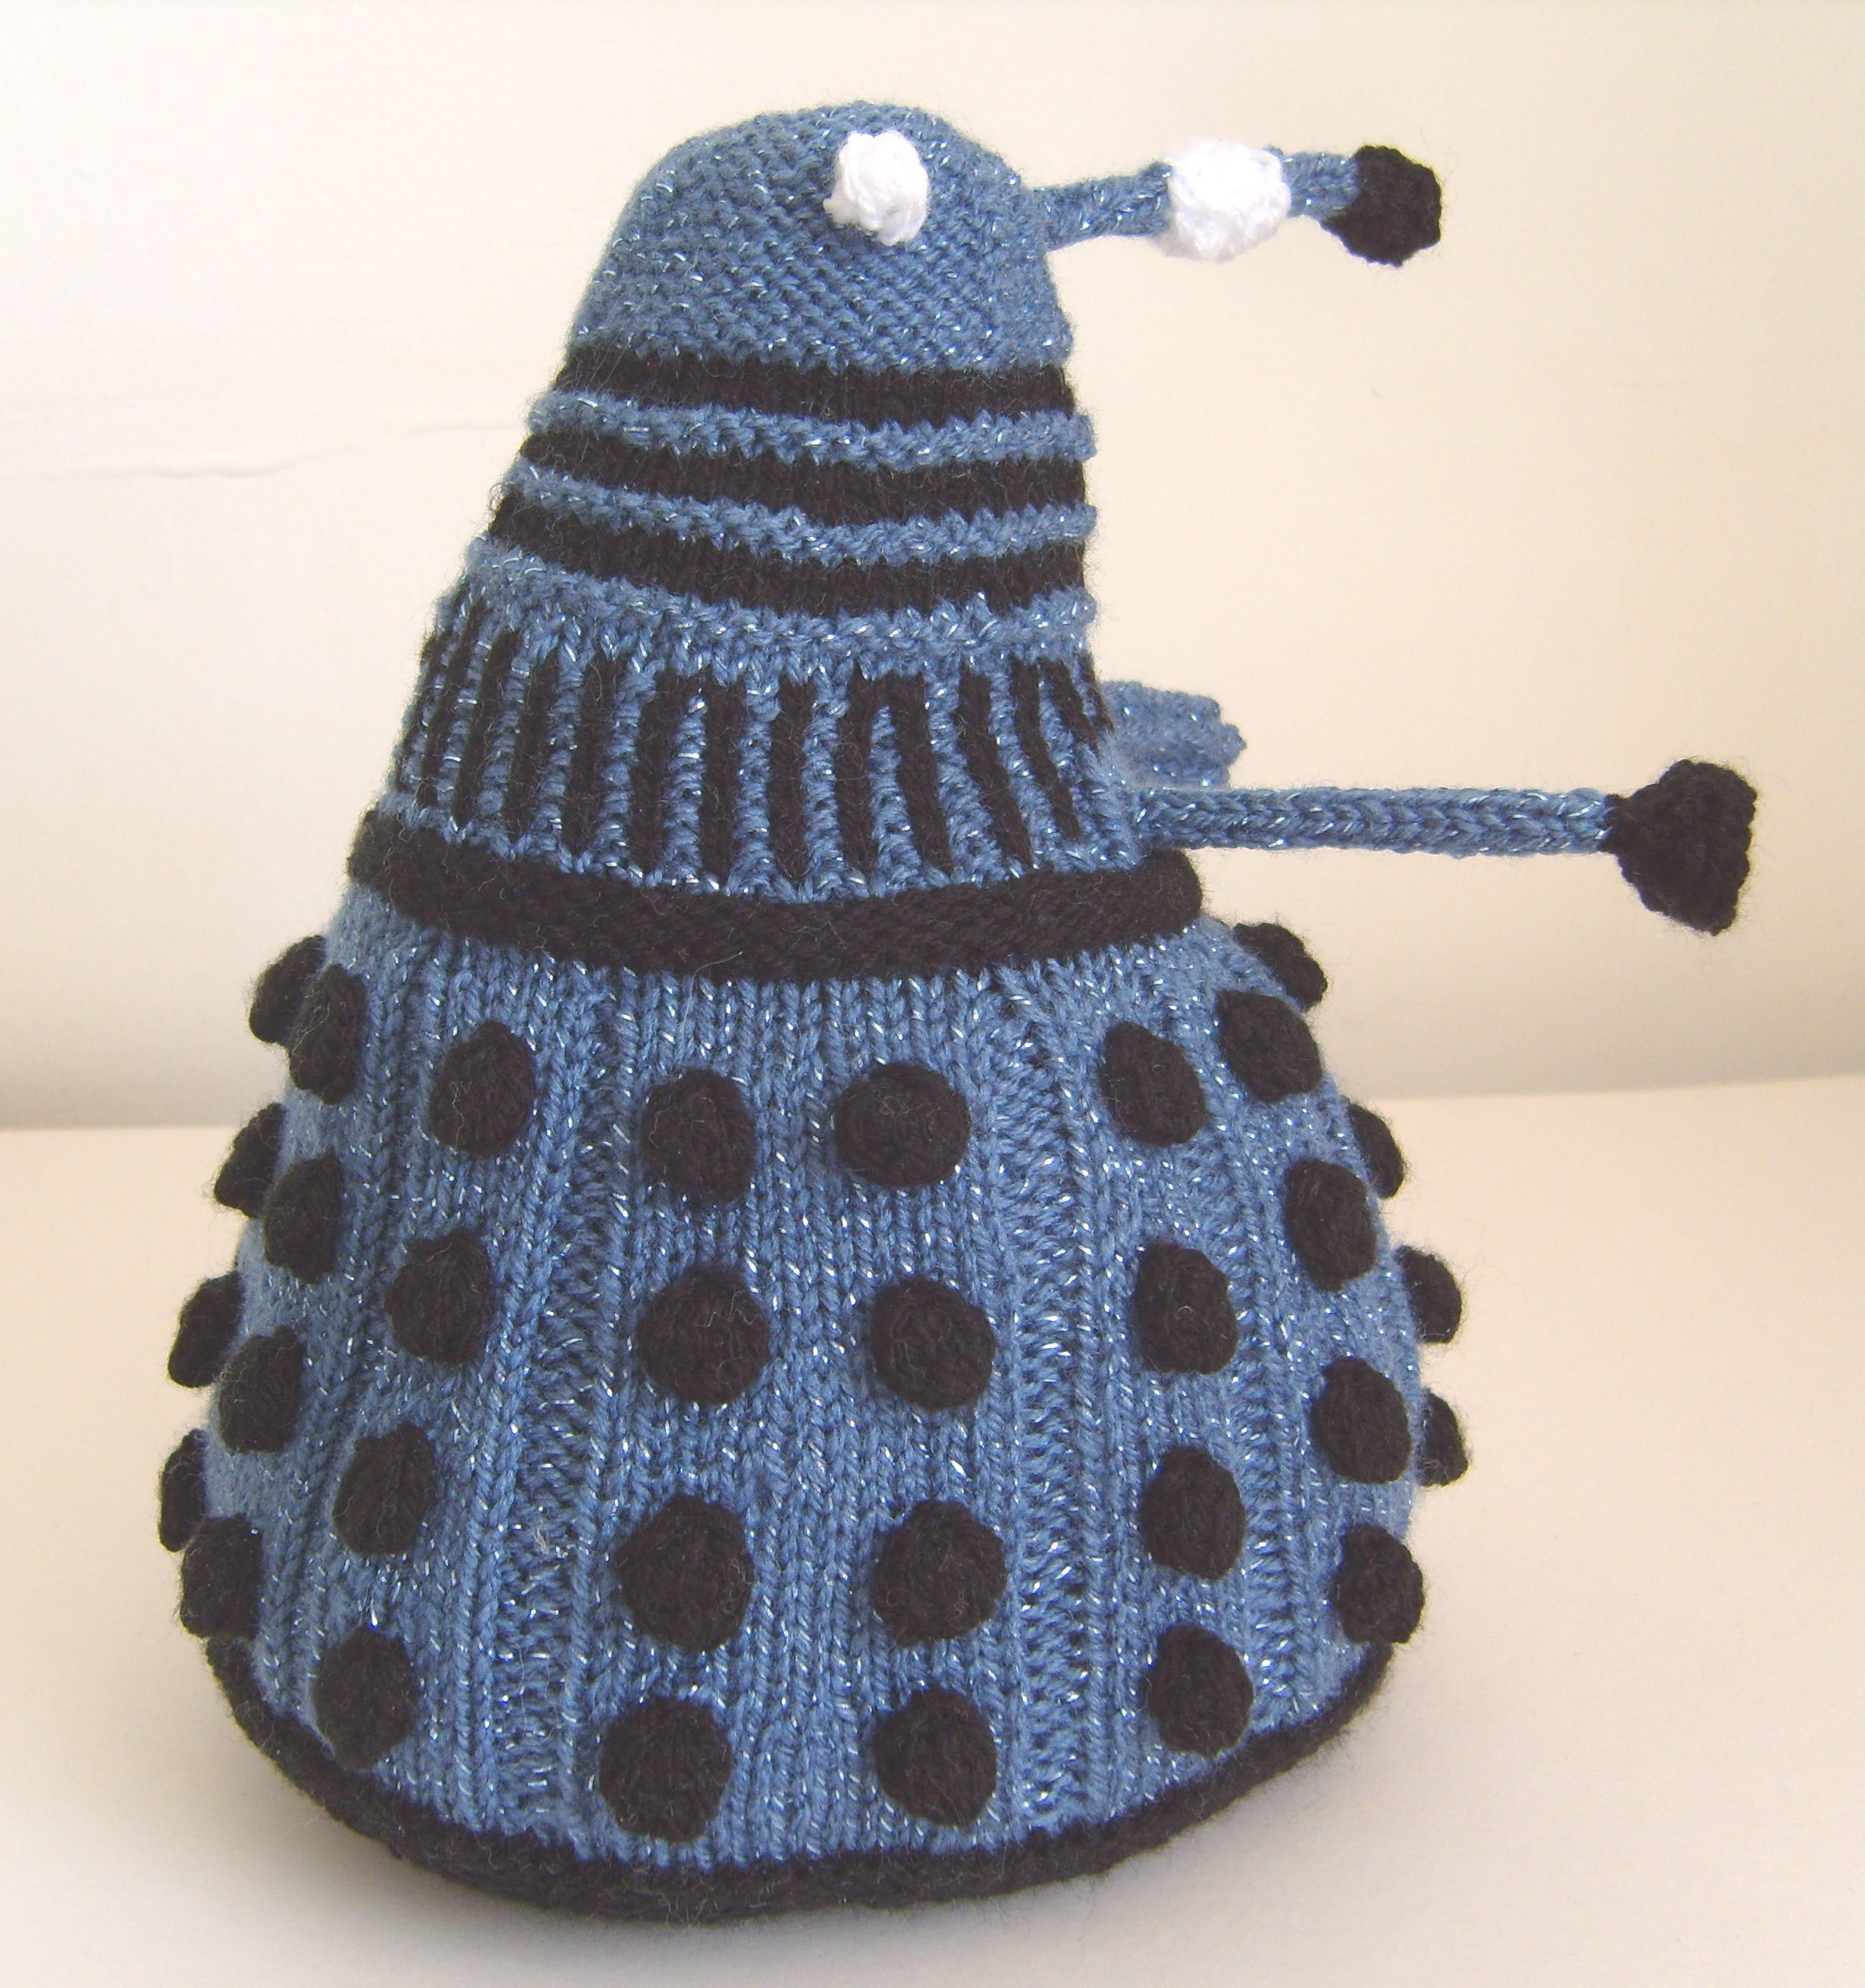 Knitted Dalek Pattern Hand Knitted Dalek In Steel Blue Lurex With Black Details